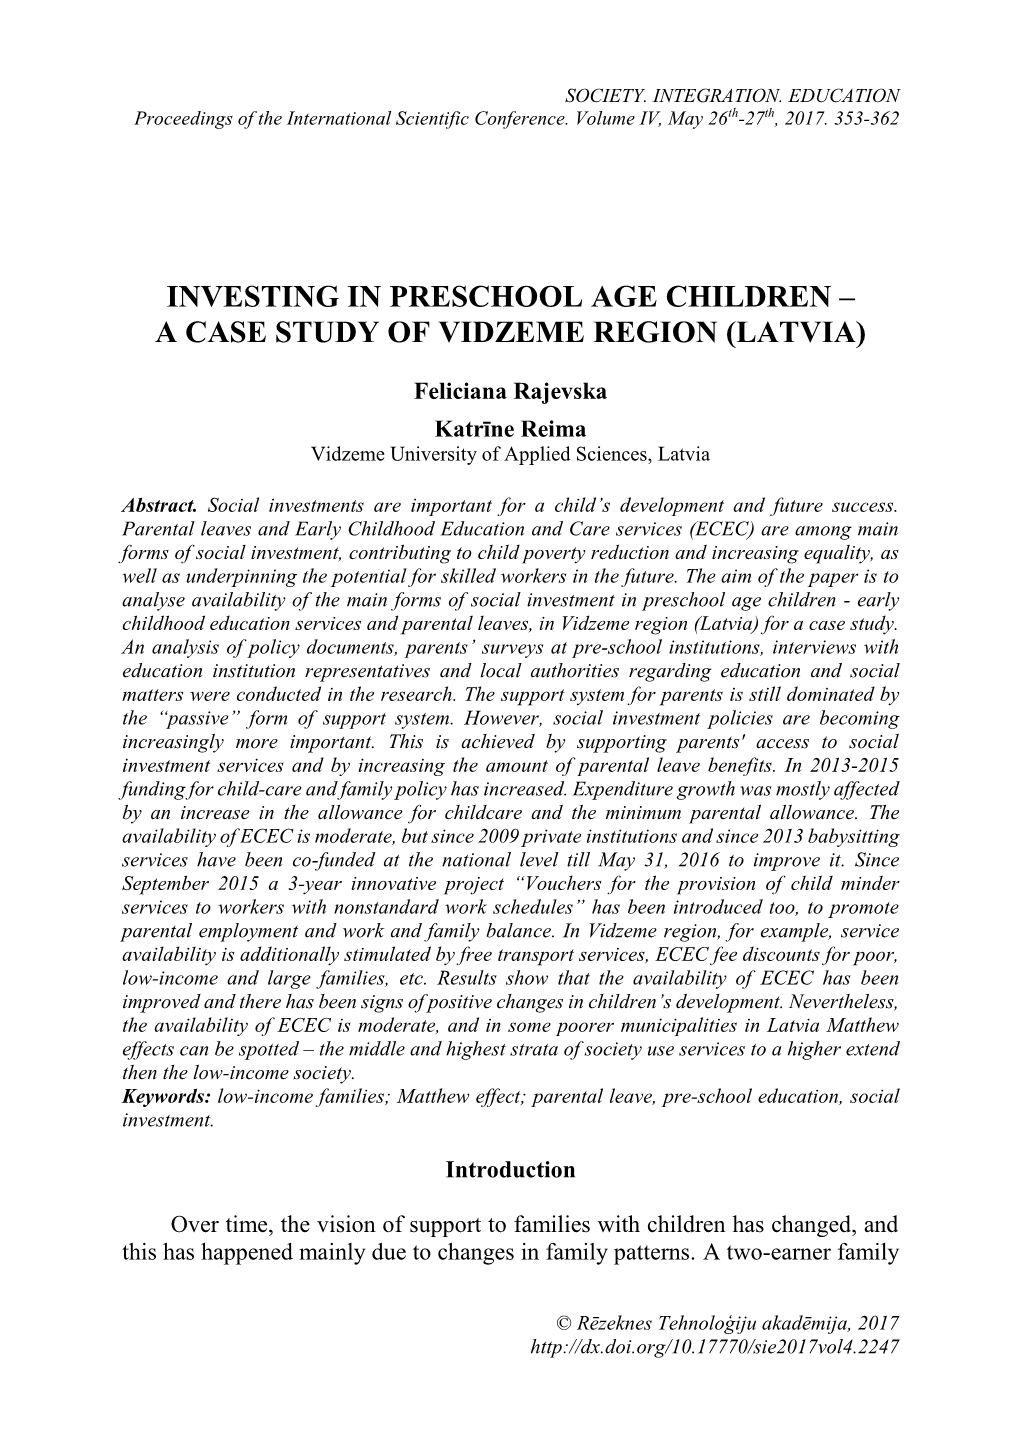 Investing in Preschool Age Children – a Case Study of Vidzeme Region (Latvia)